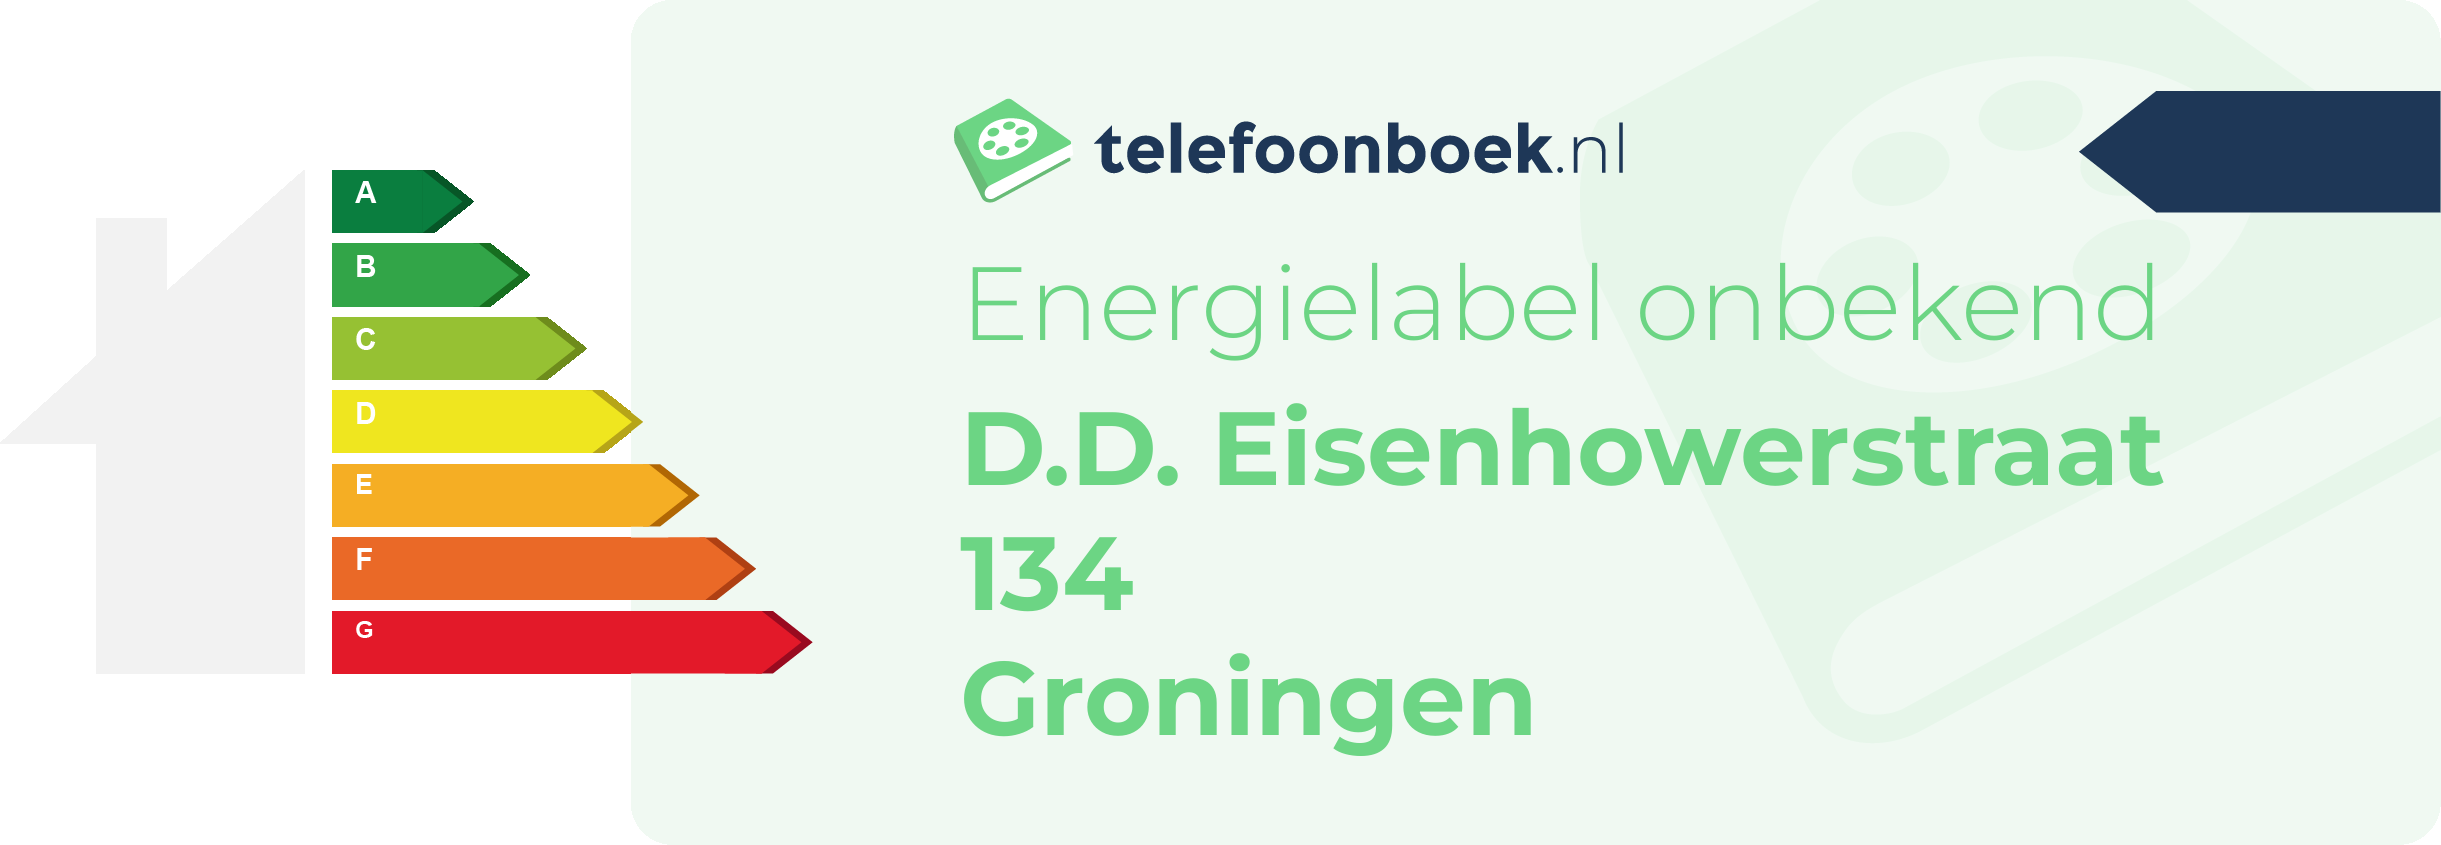 Energielabel D.D. Eisenhowerstraat 134 Groningen